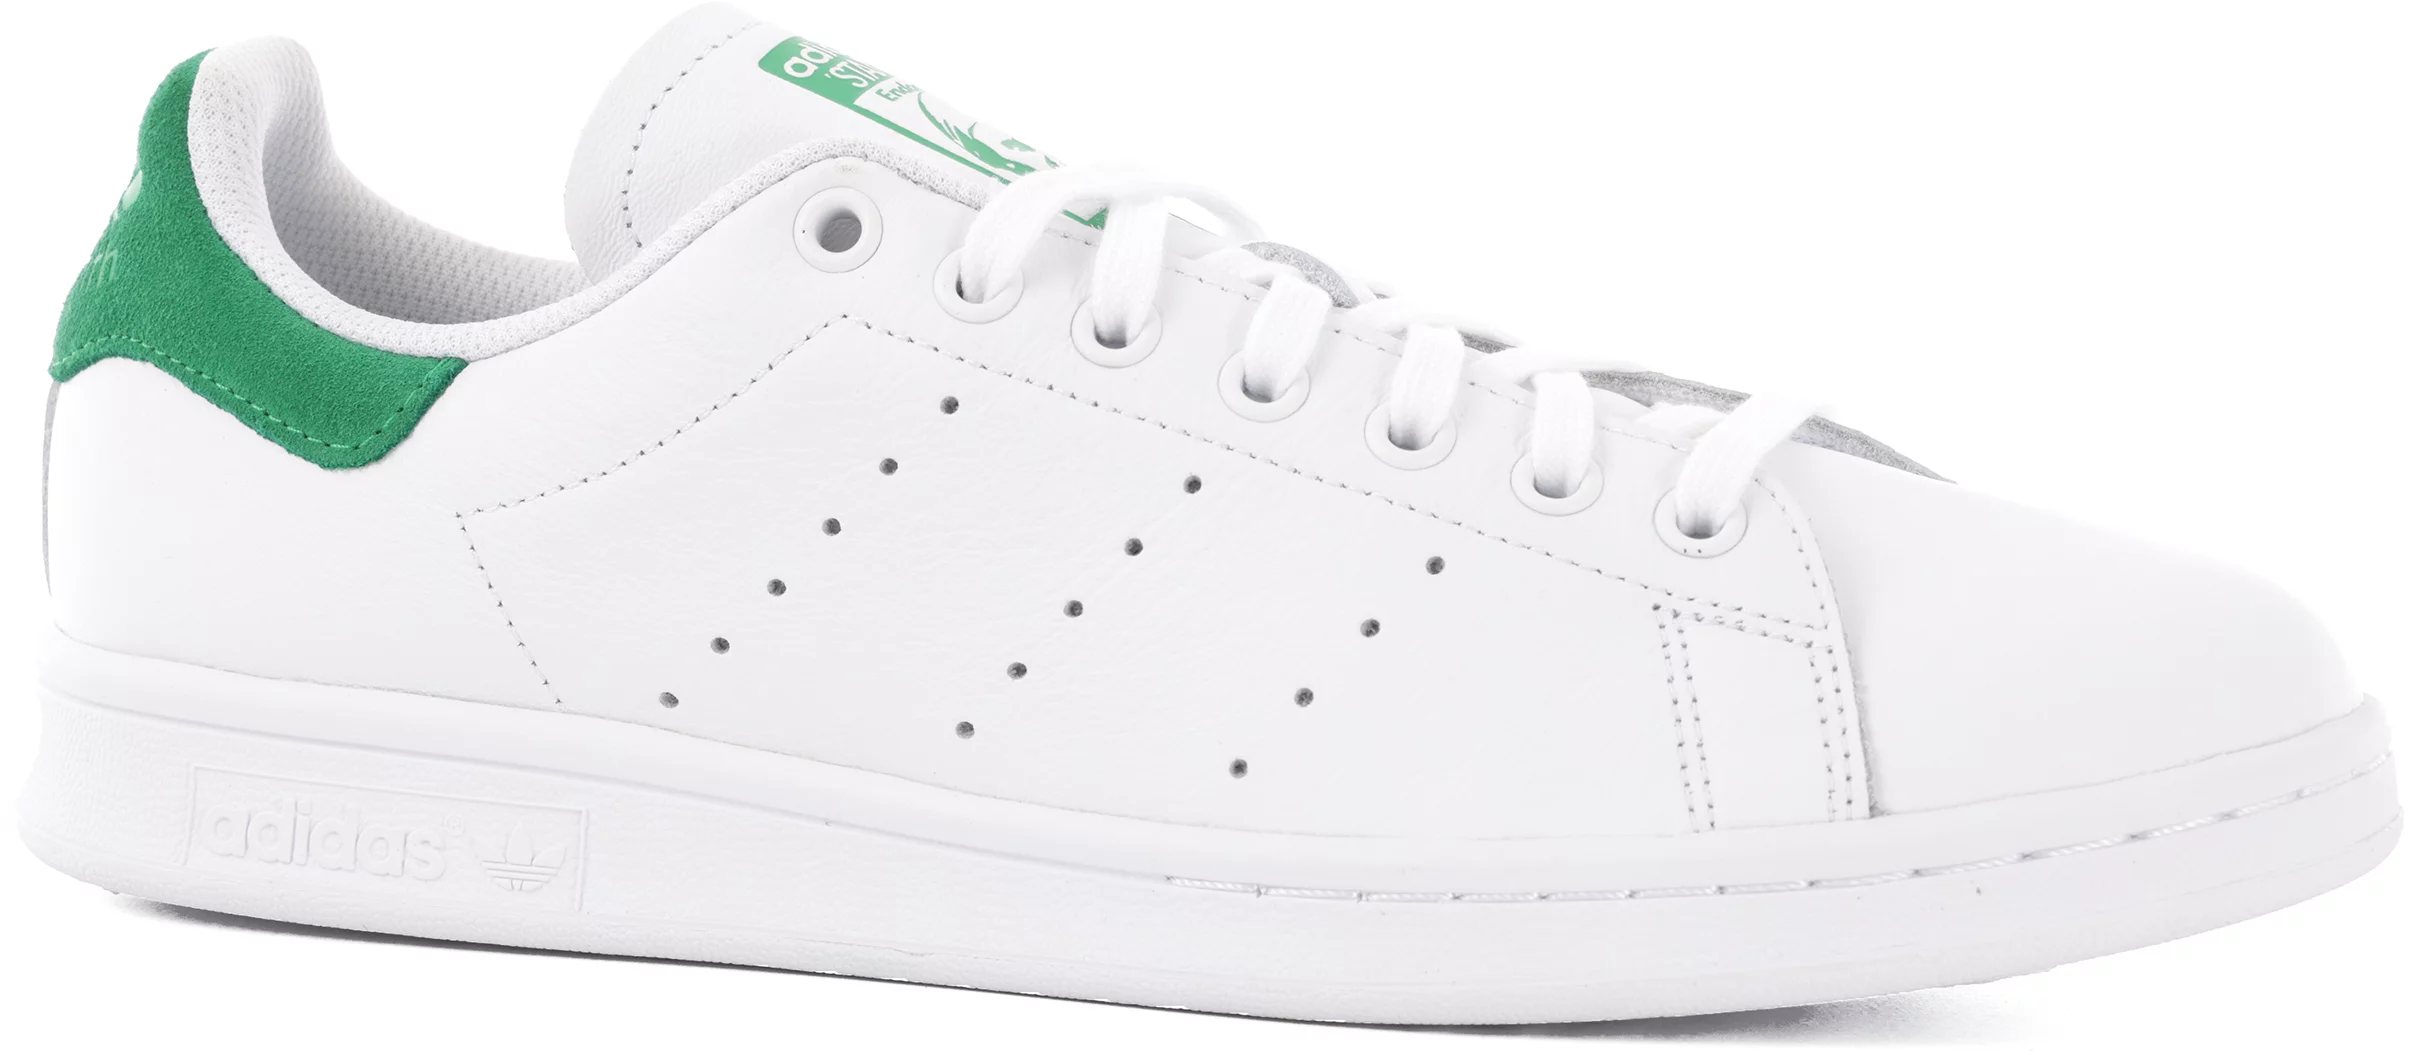 Adidas Stan Smith Skate - footwear white/green - Free | Tactics